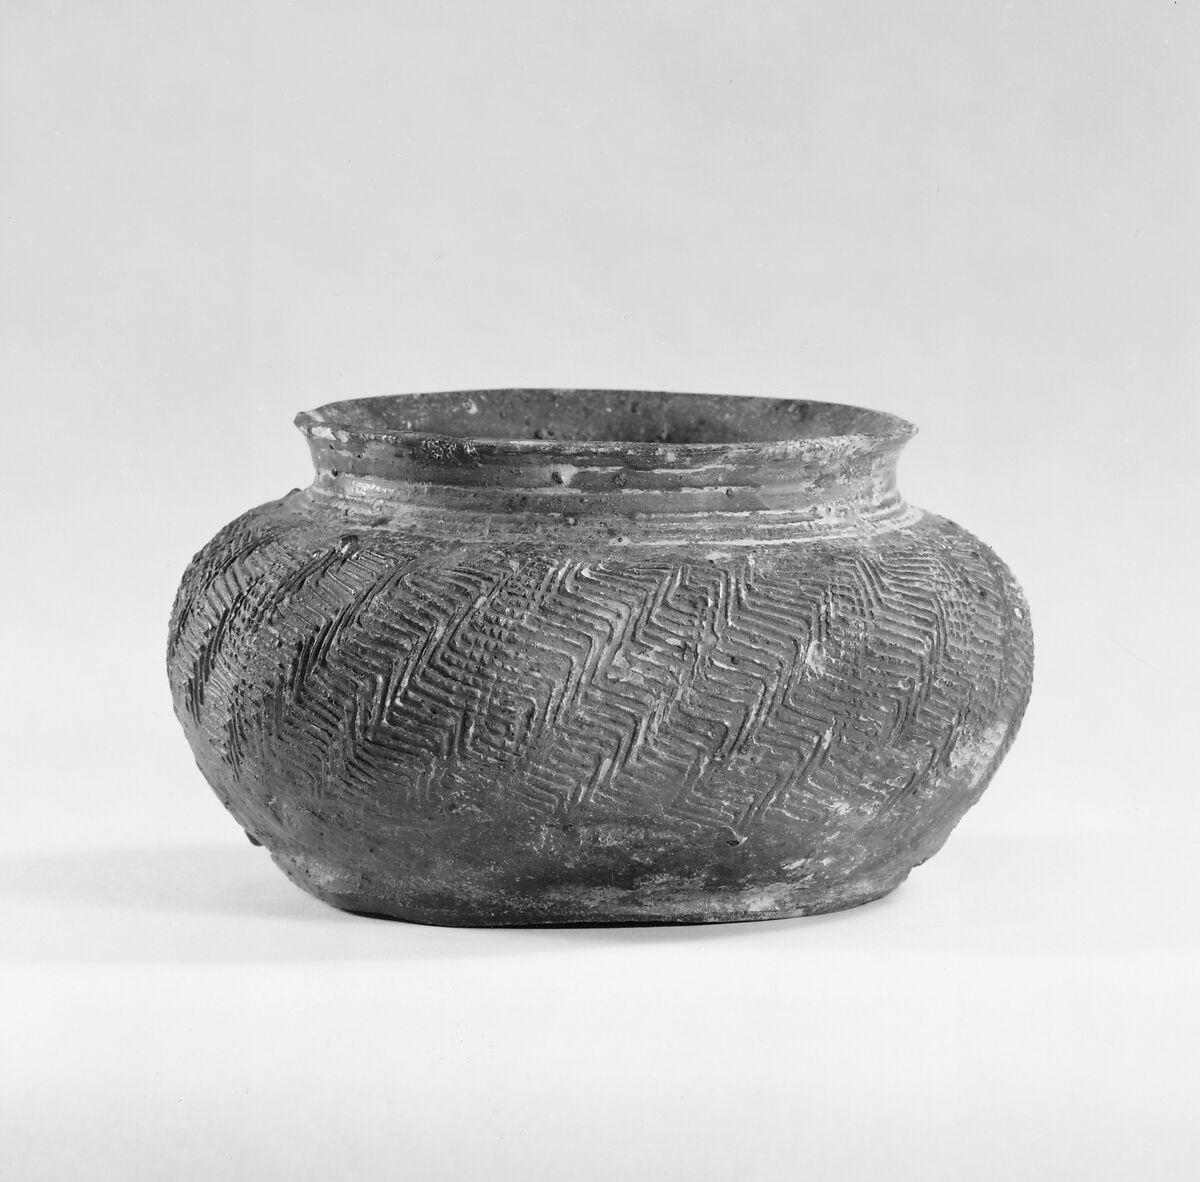 Jar (Guan), Stoneware with impressed decoration, China 